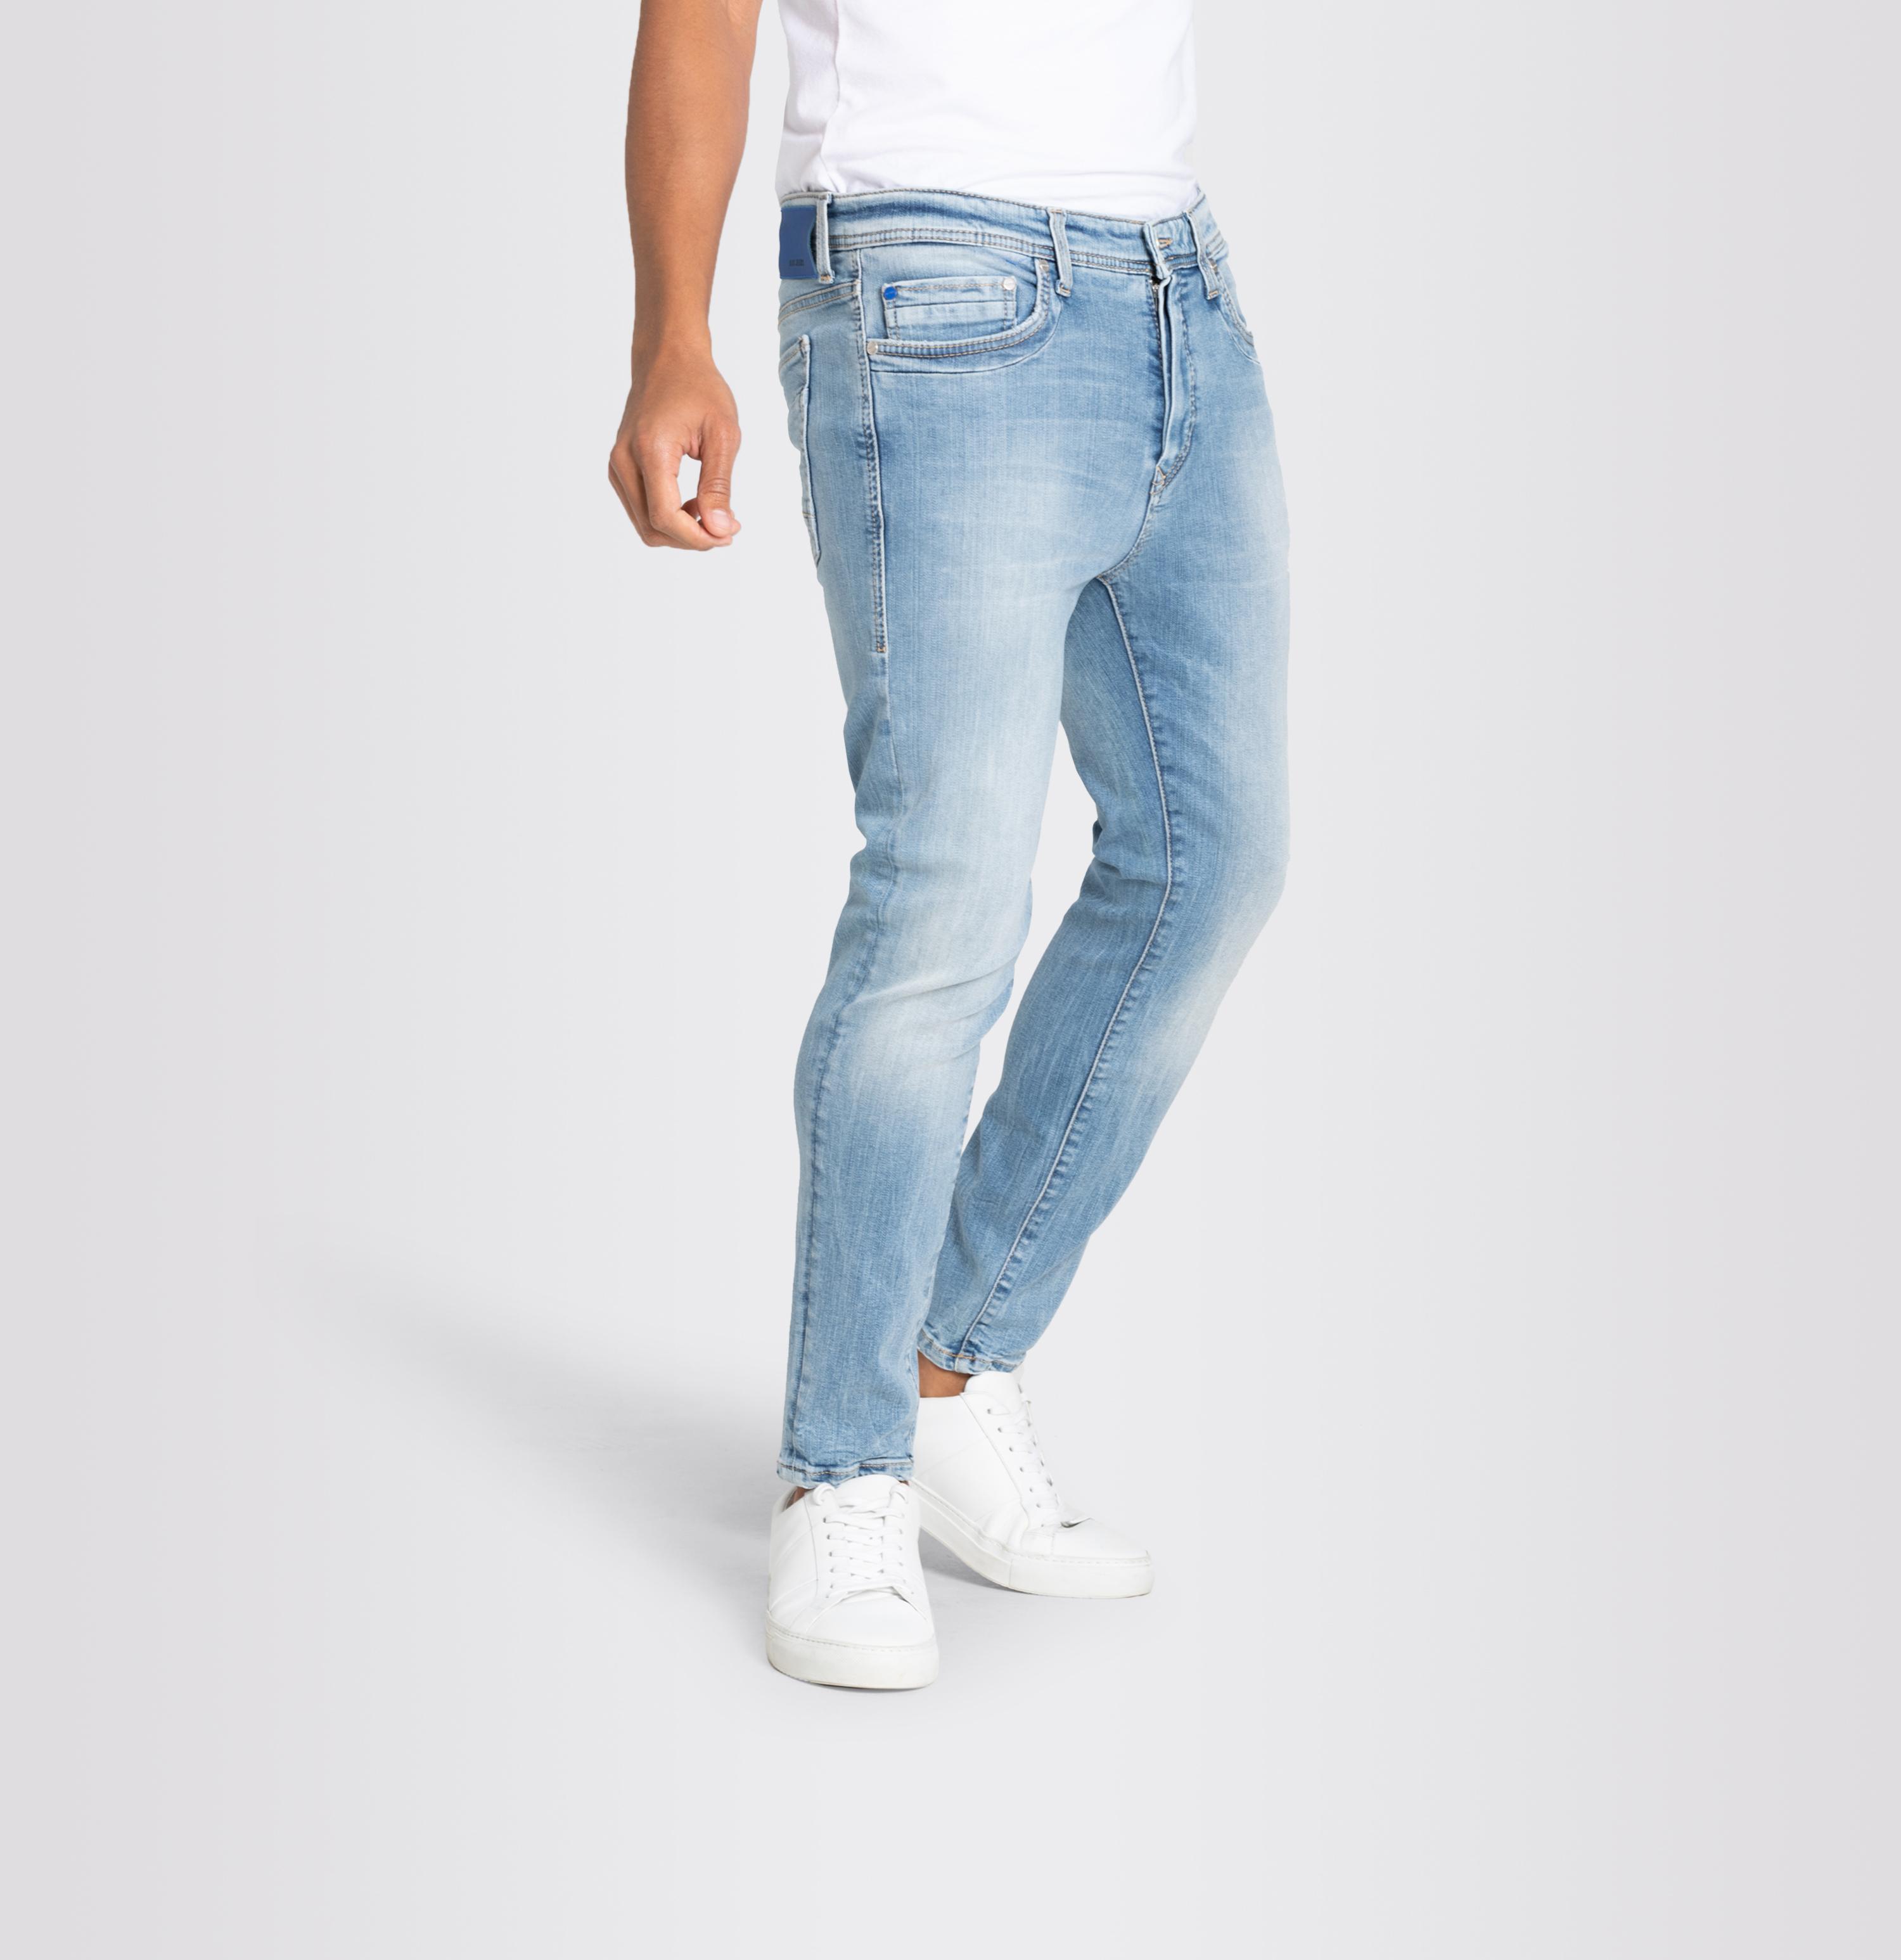 Jeans Denim, MAC | AT blau Herrenhose, - Garvin, Shop H277 90s